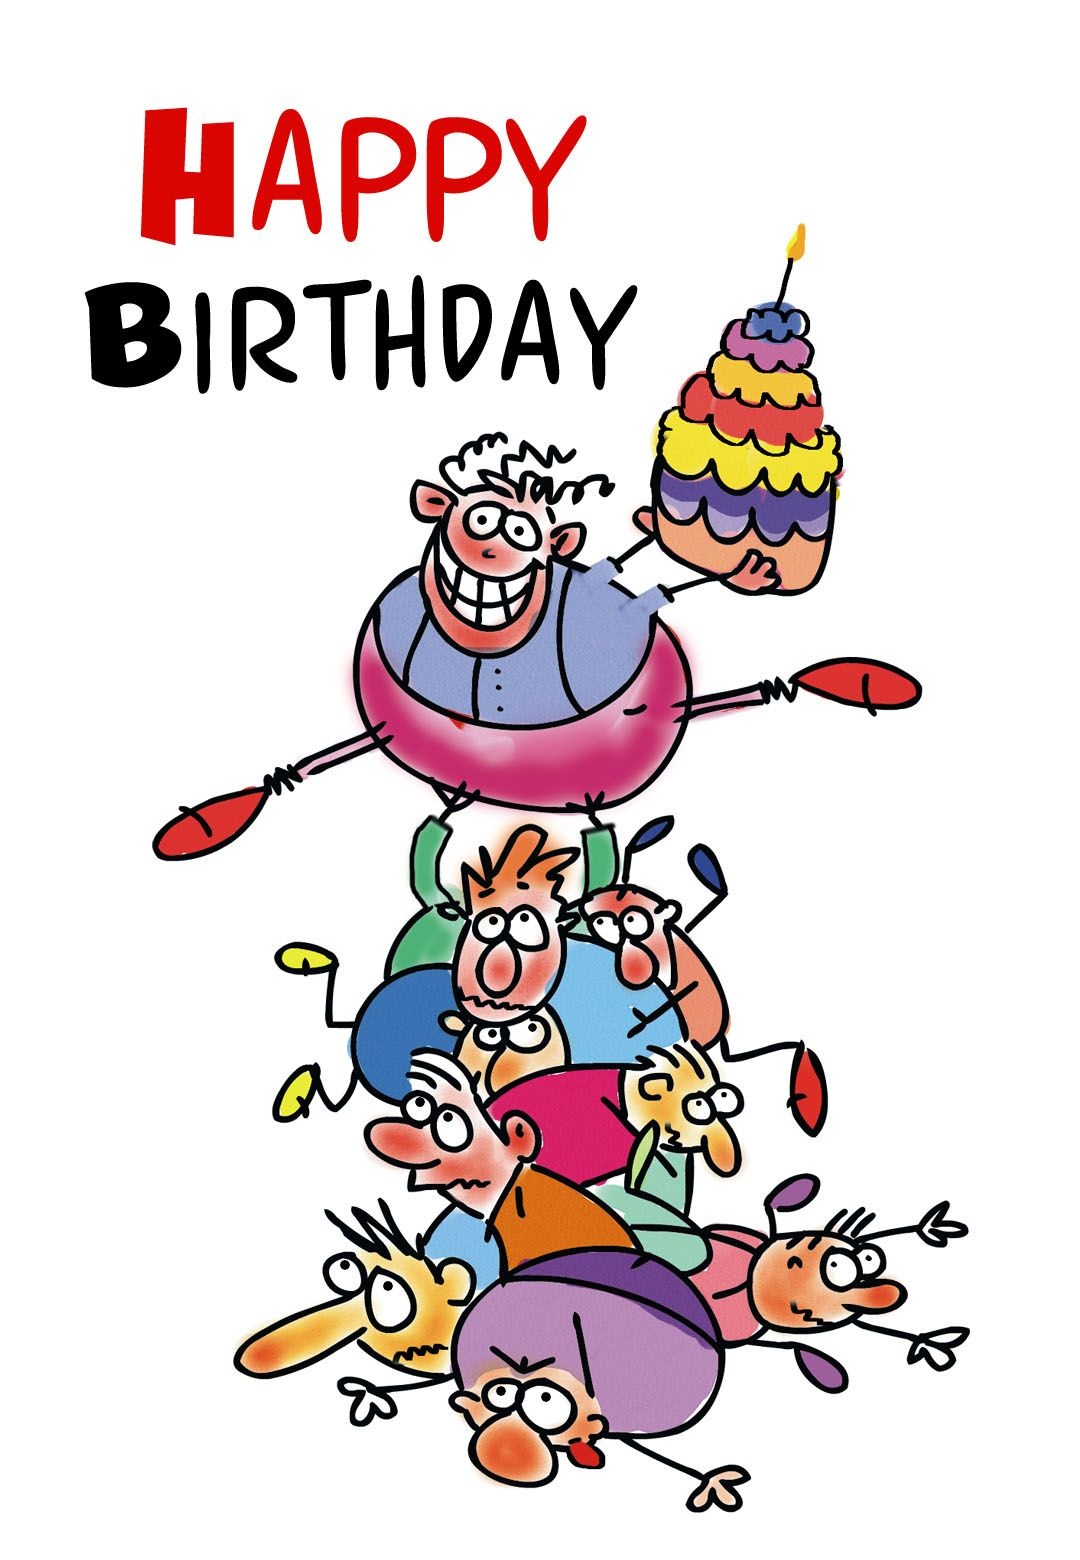 Free Printable Funny Birthday Greeting Card | Gifts To Make | Free - Free Funny Printable Cards